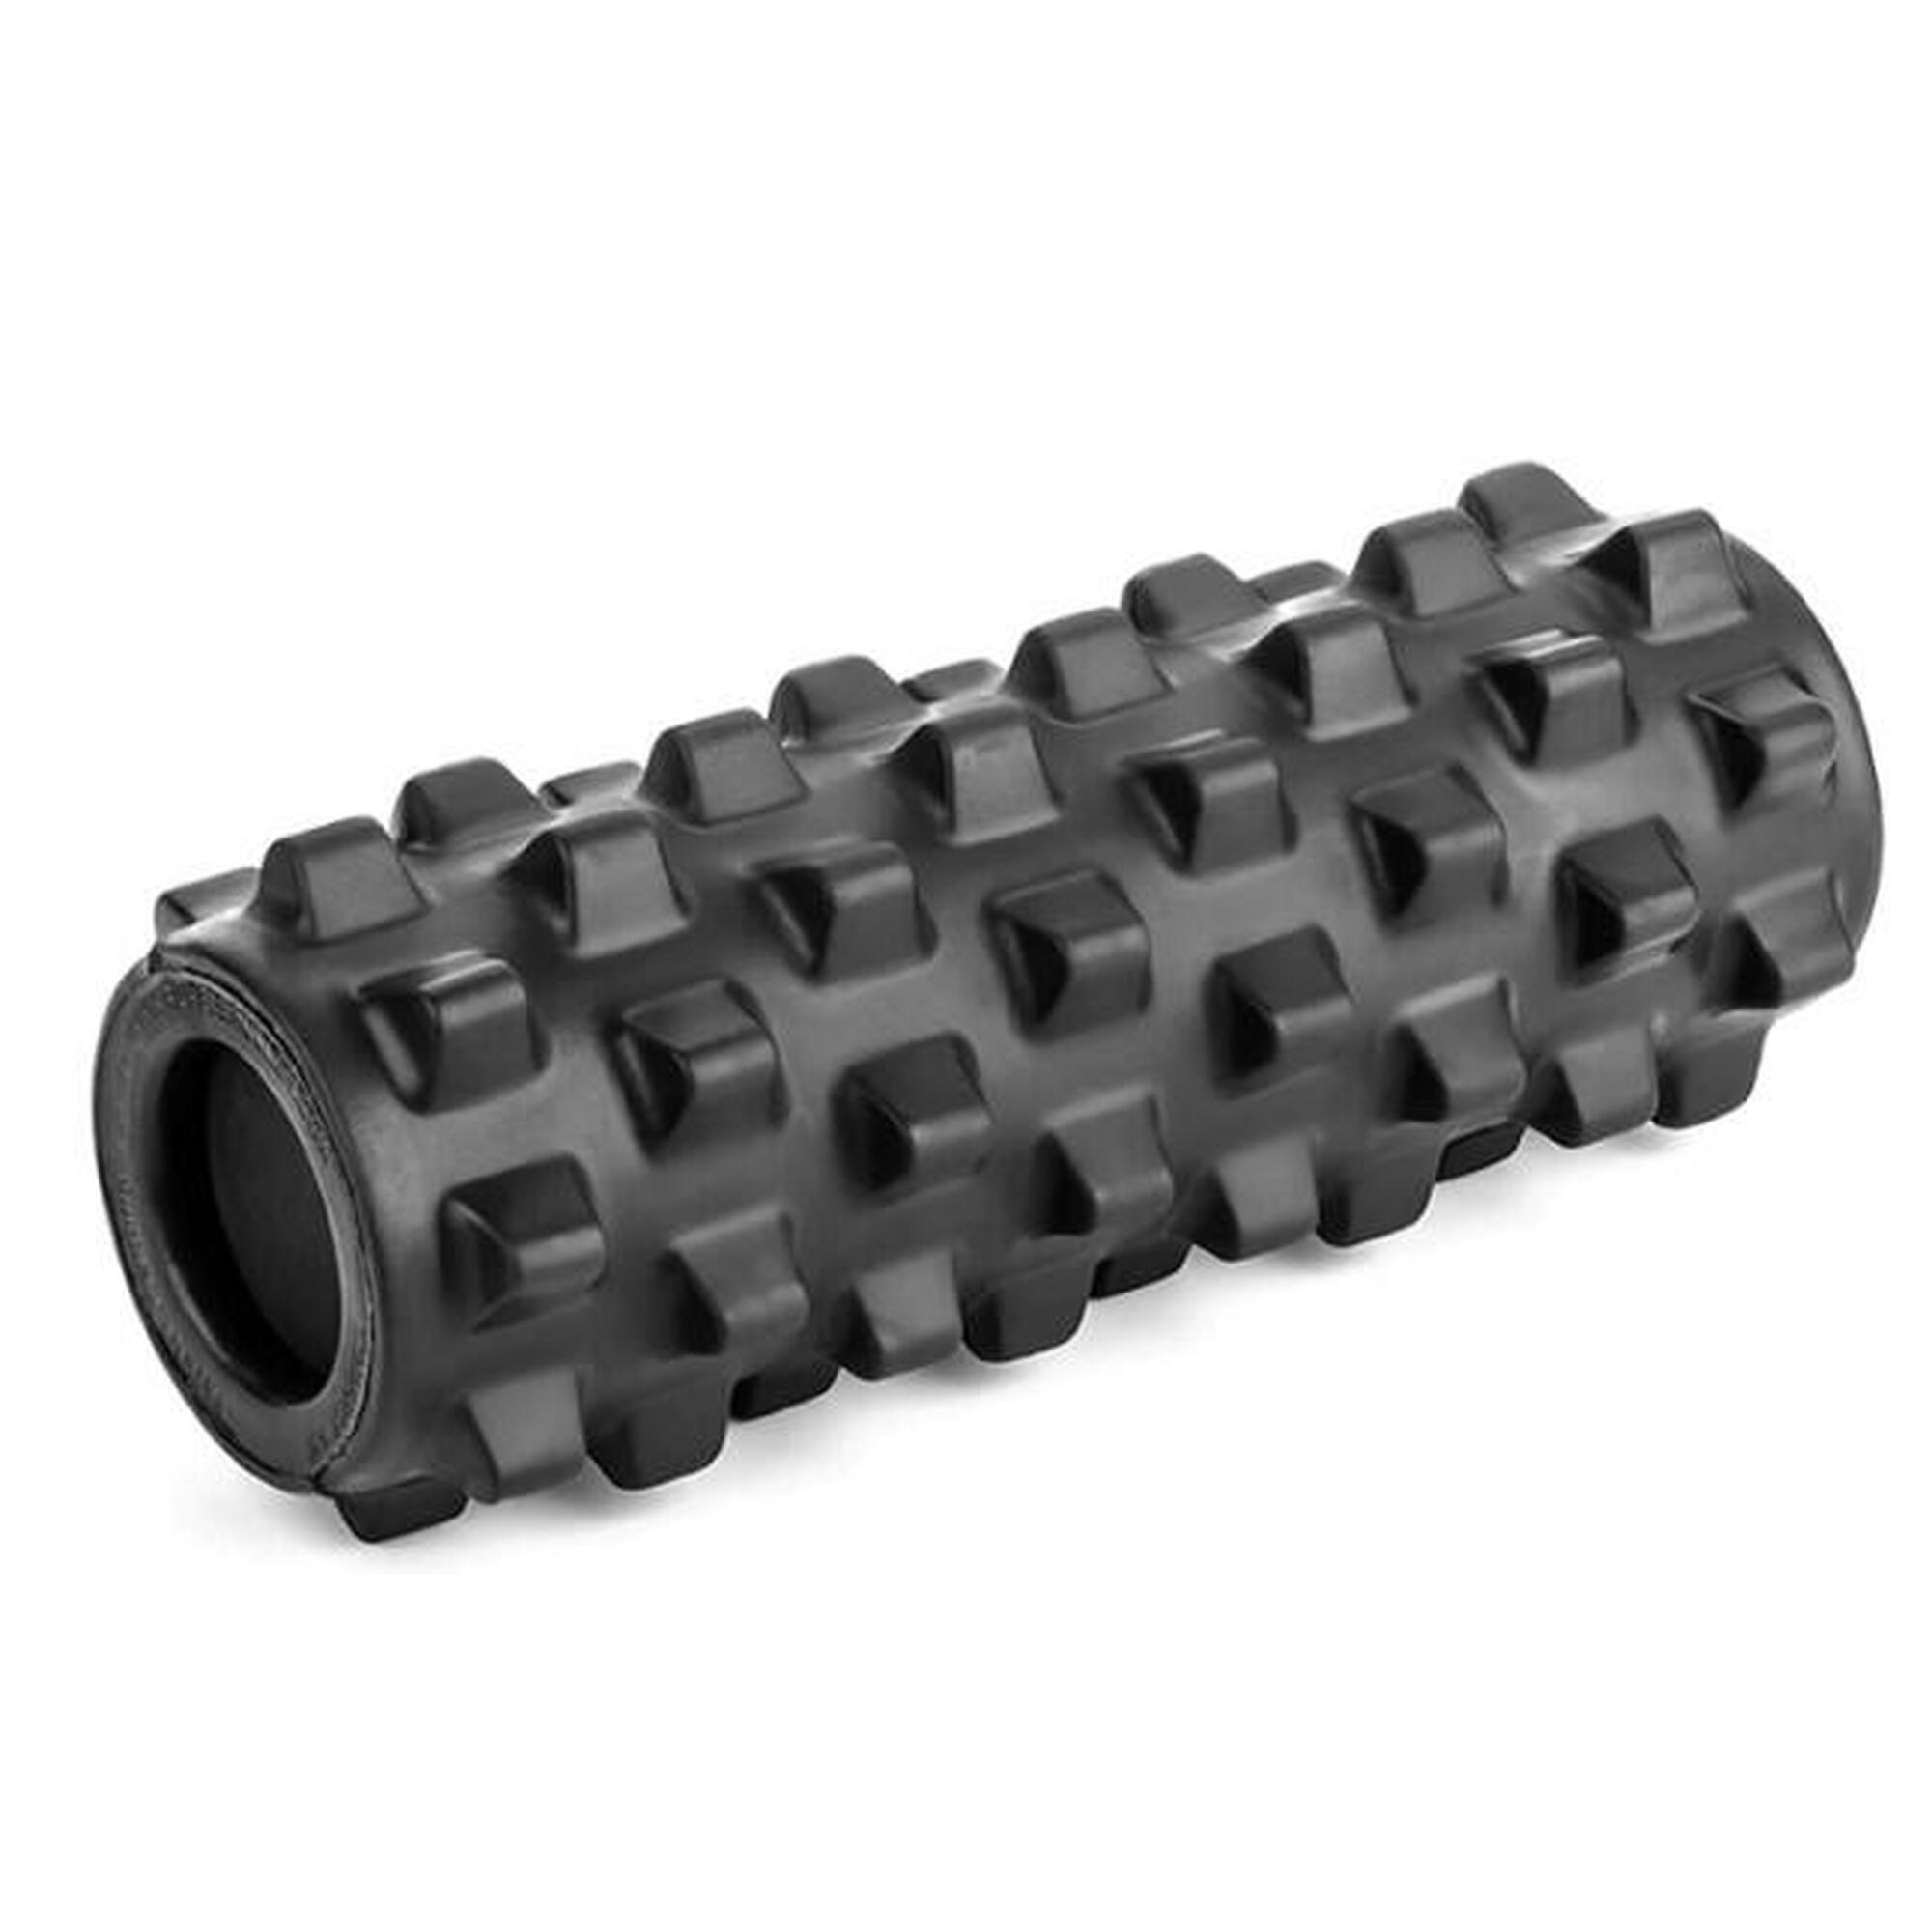 12" Compact Xtra Firm Textured Foam Roller - Black